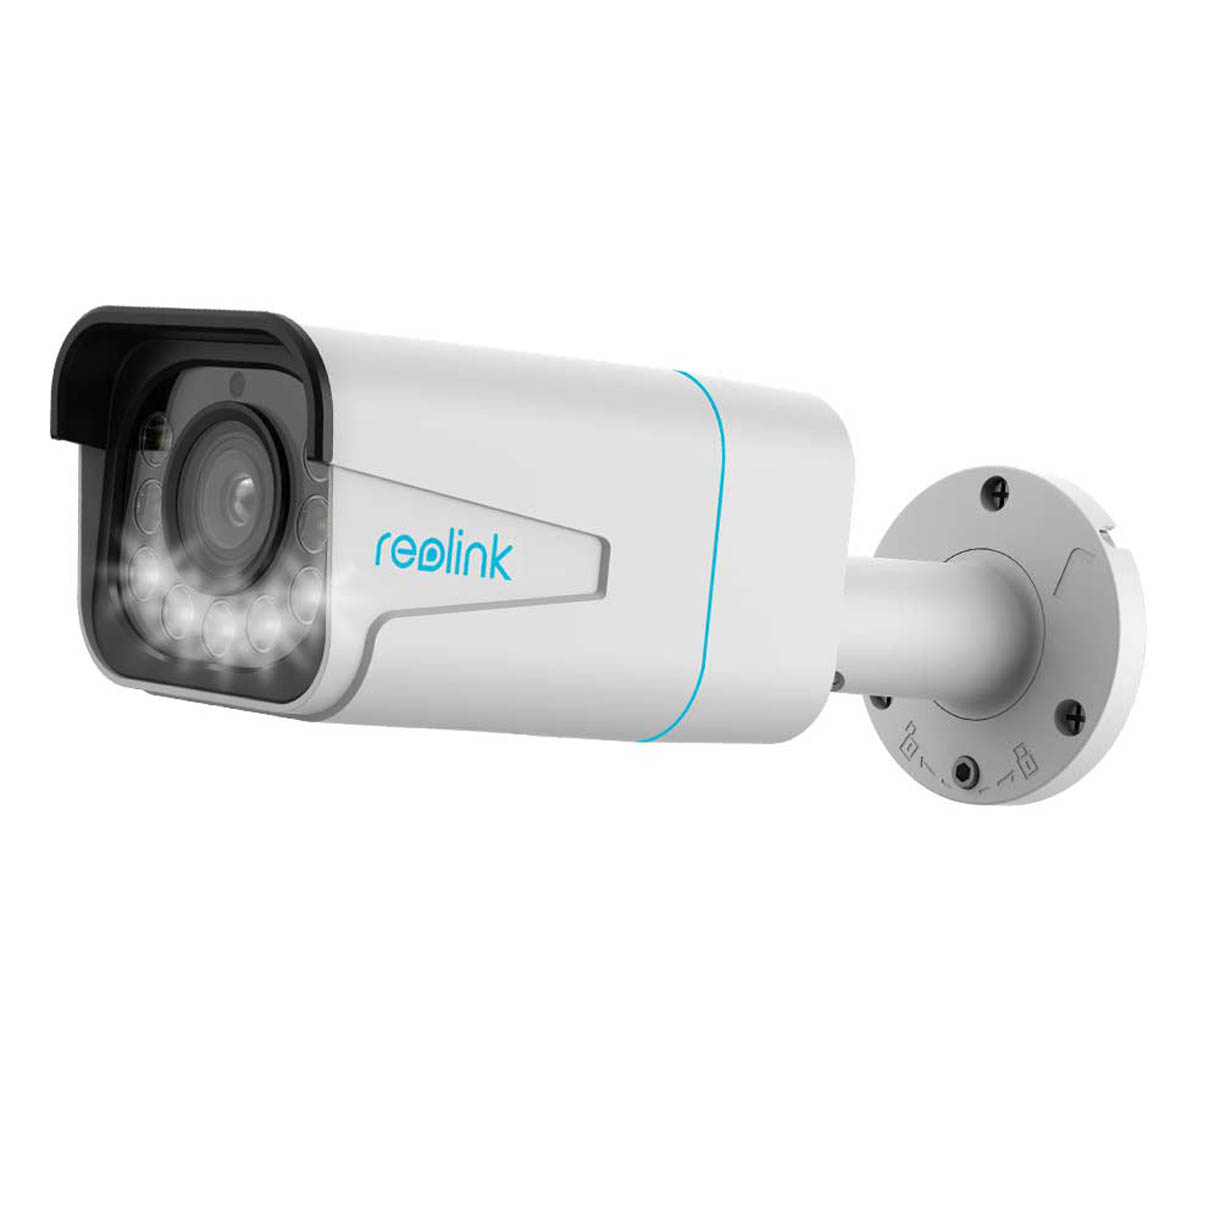 REOLINK B4K11, Überwachungskamera, pixels 2160 x 3840 Auflösung Video